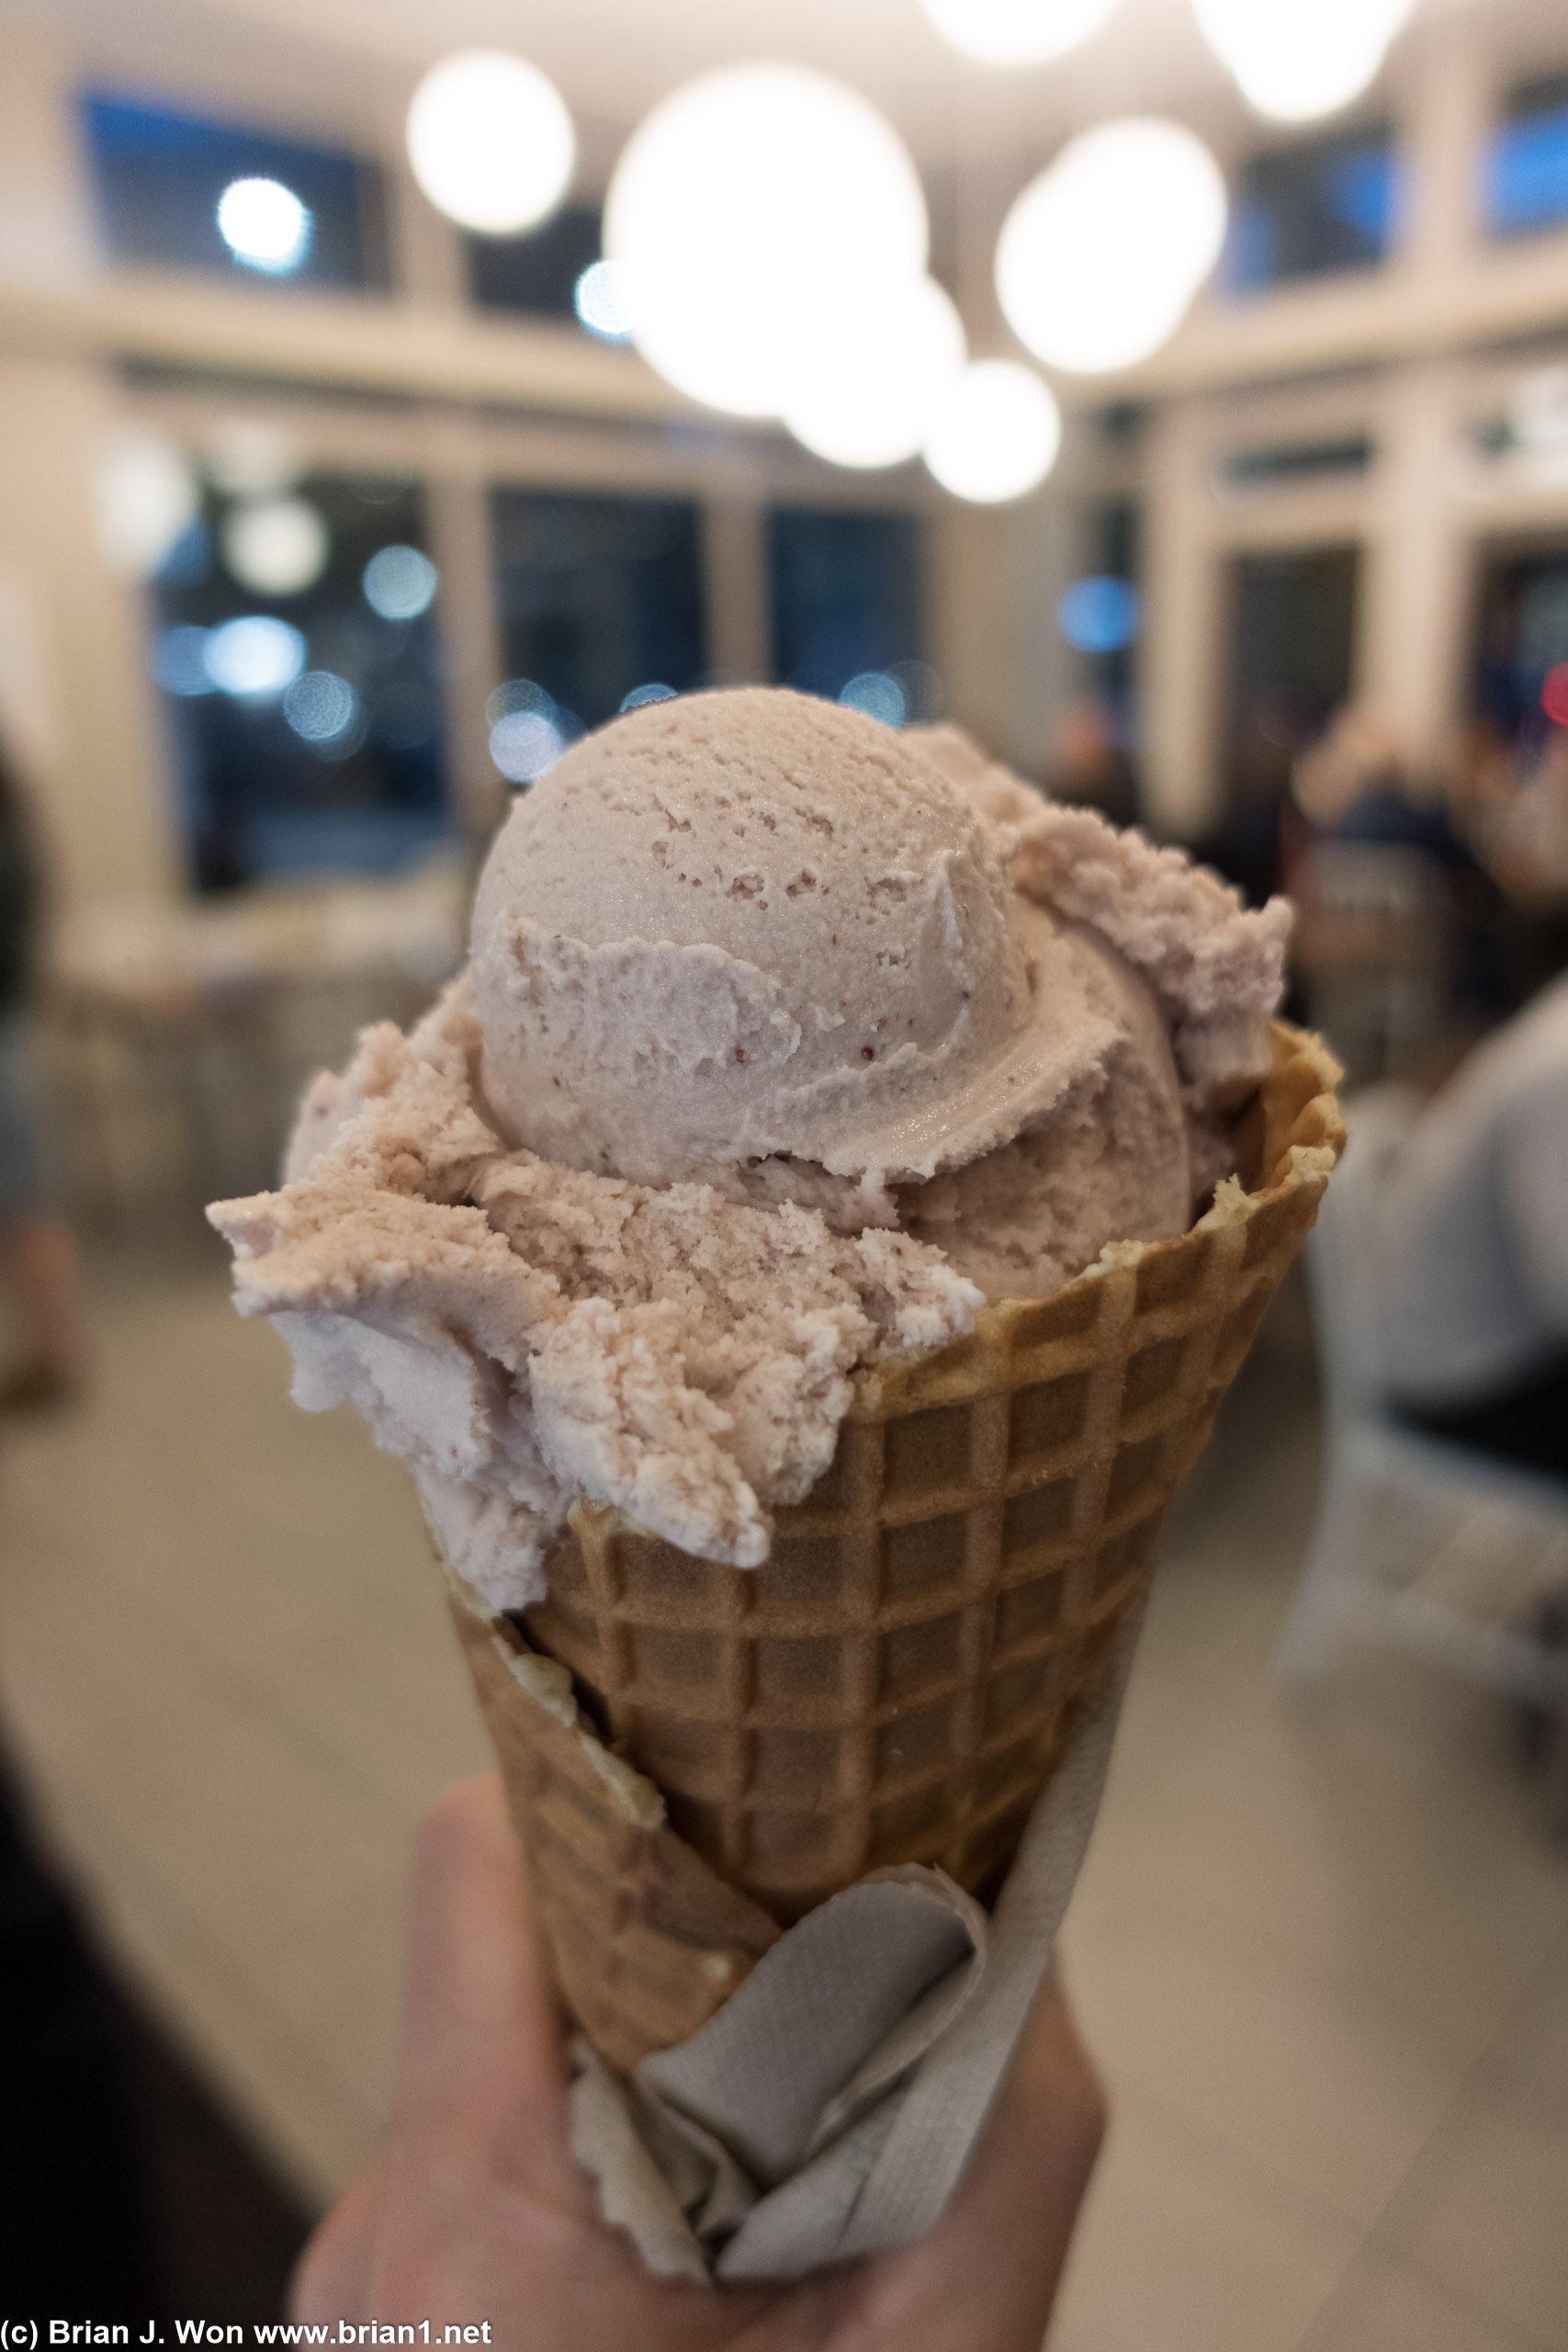 Fresh strawberry ice cream in a waffle cone.